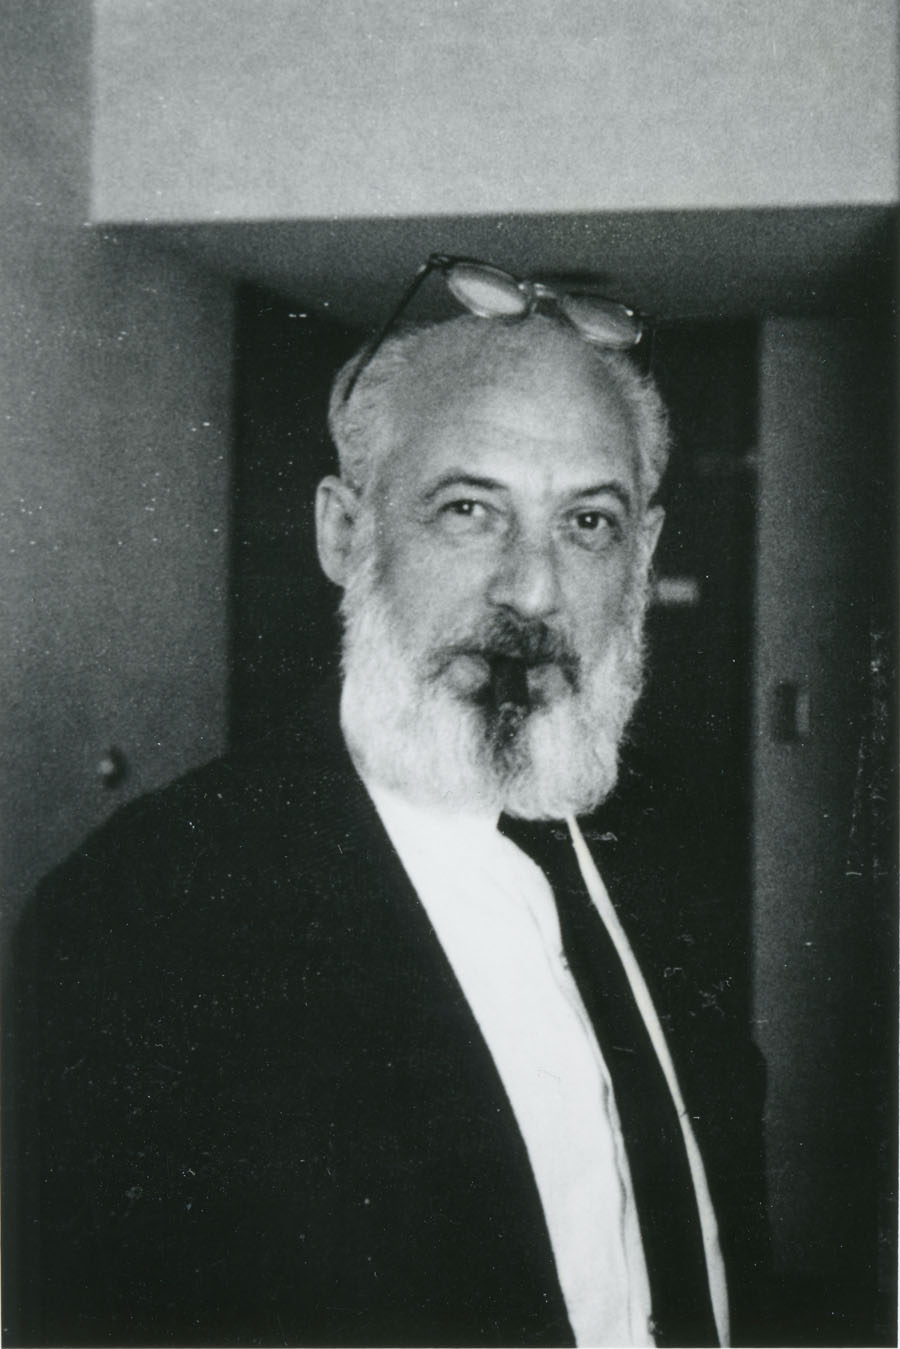 Samuel Eilenberg